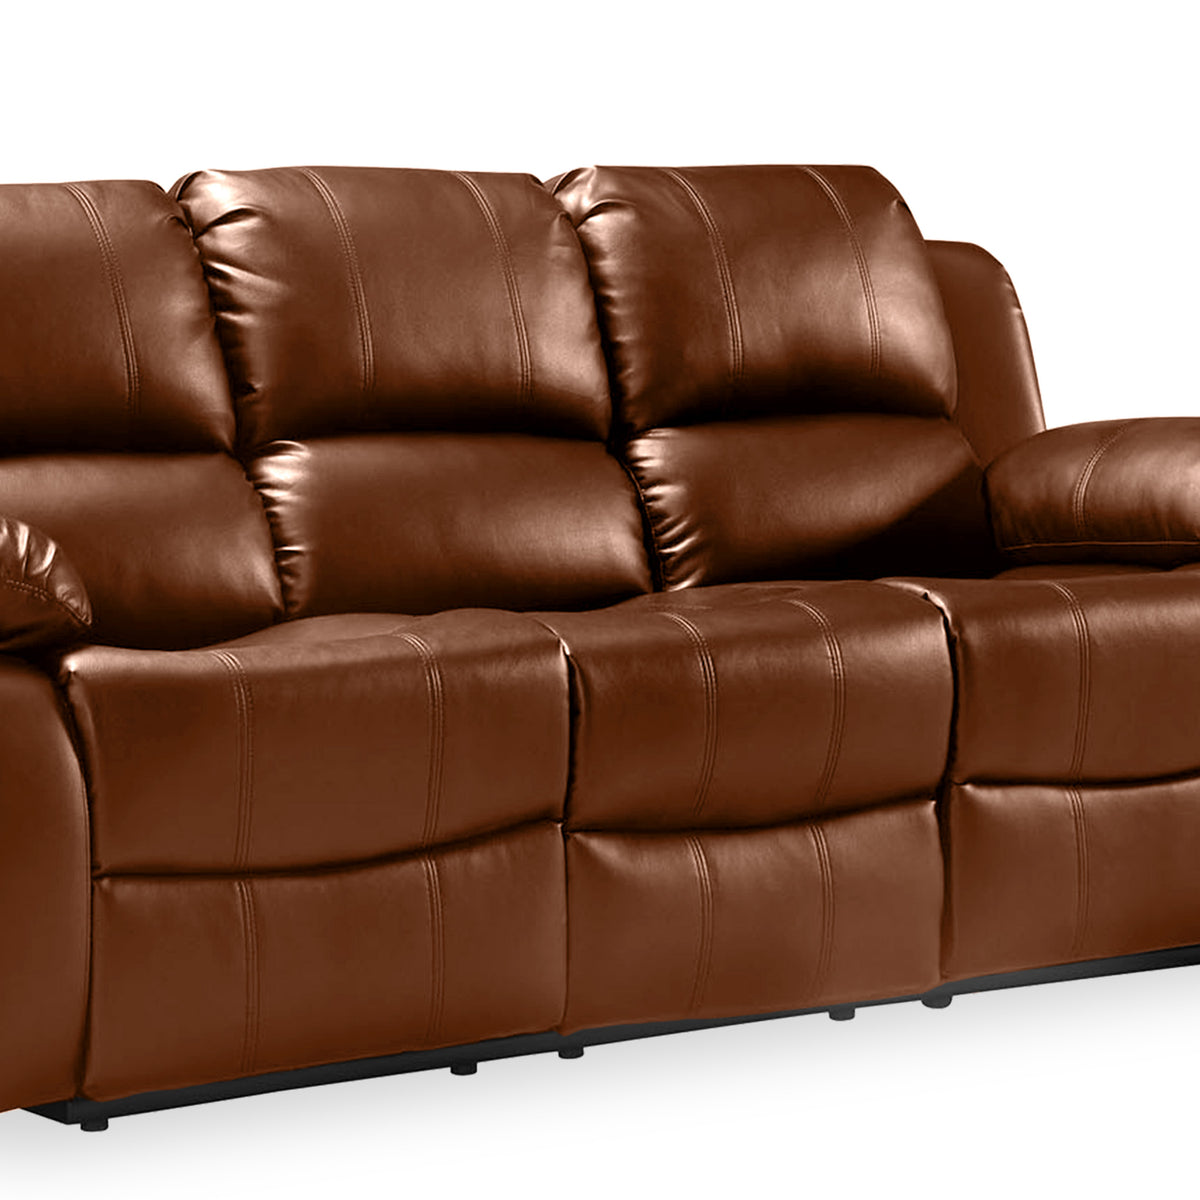 Valencia Tan 3 Seater Reclining Leather Sofa